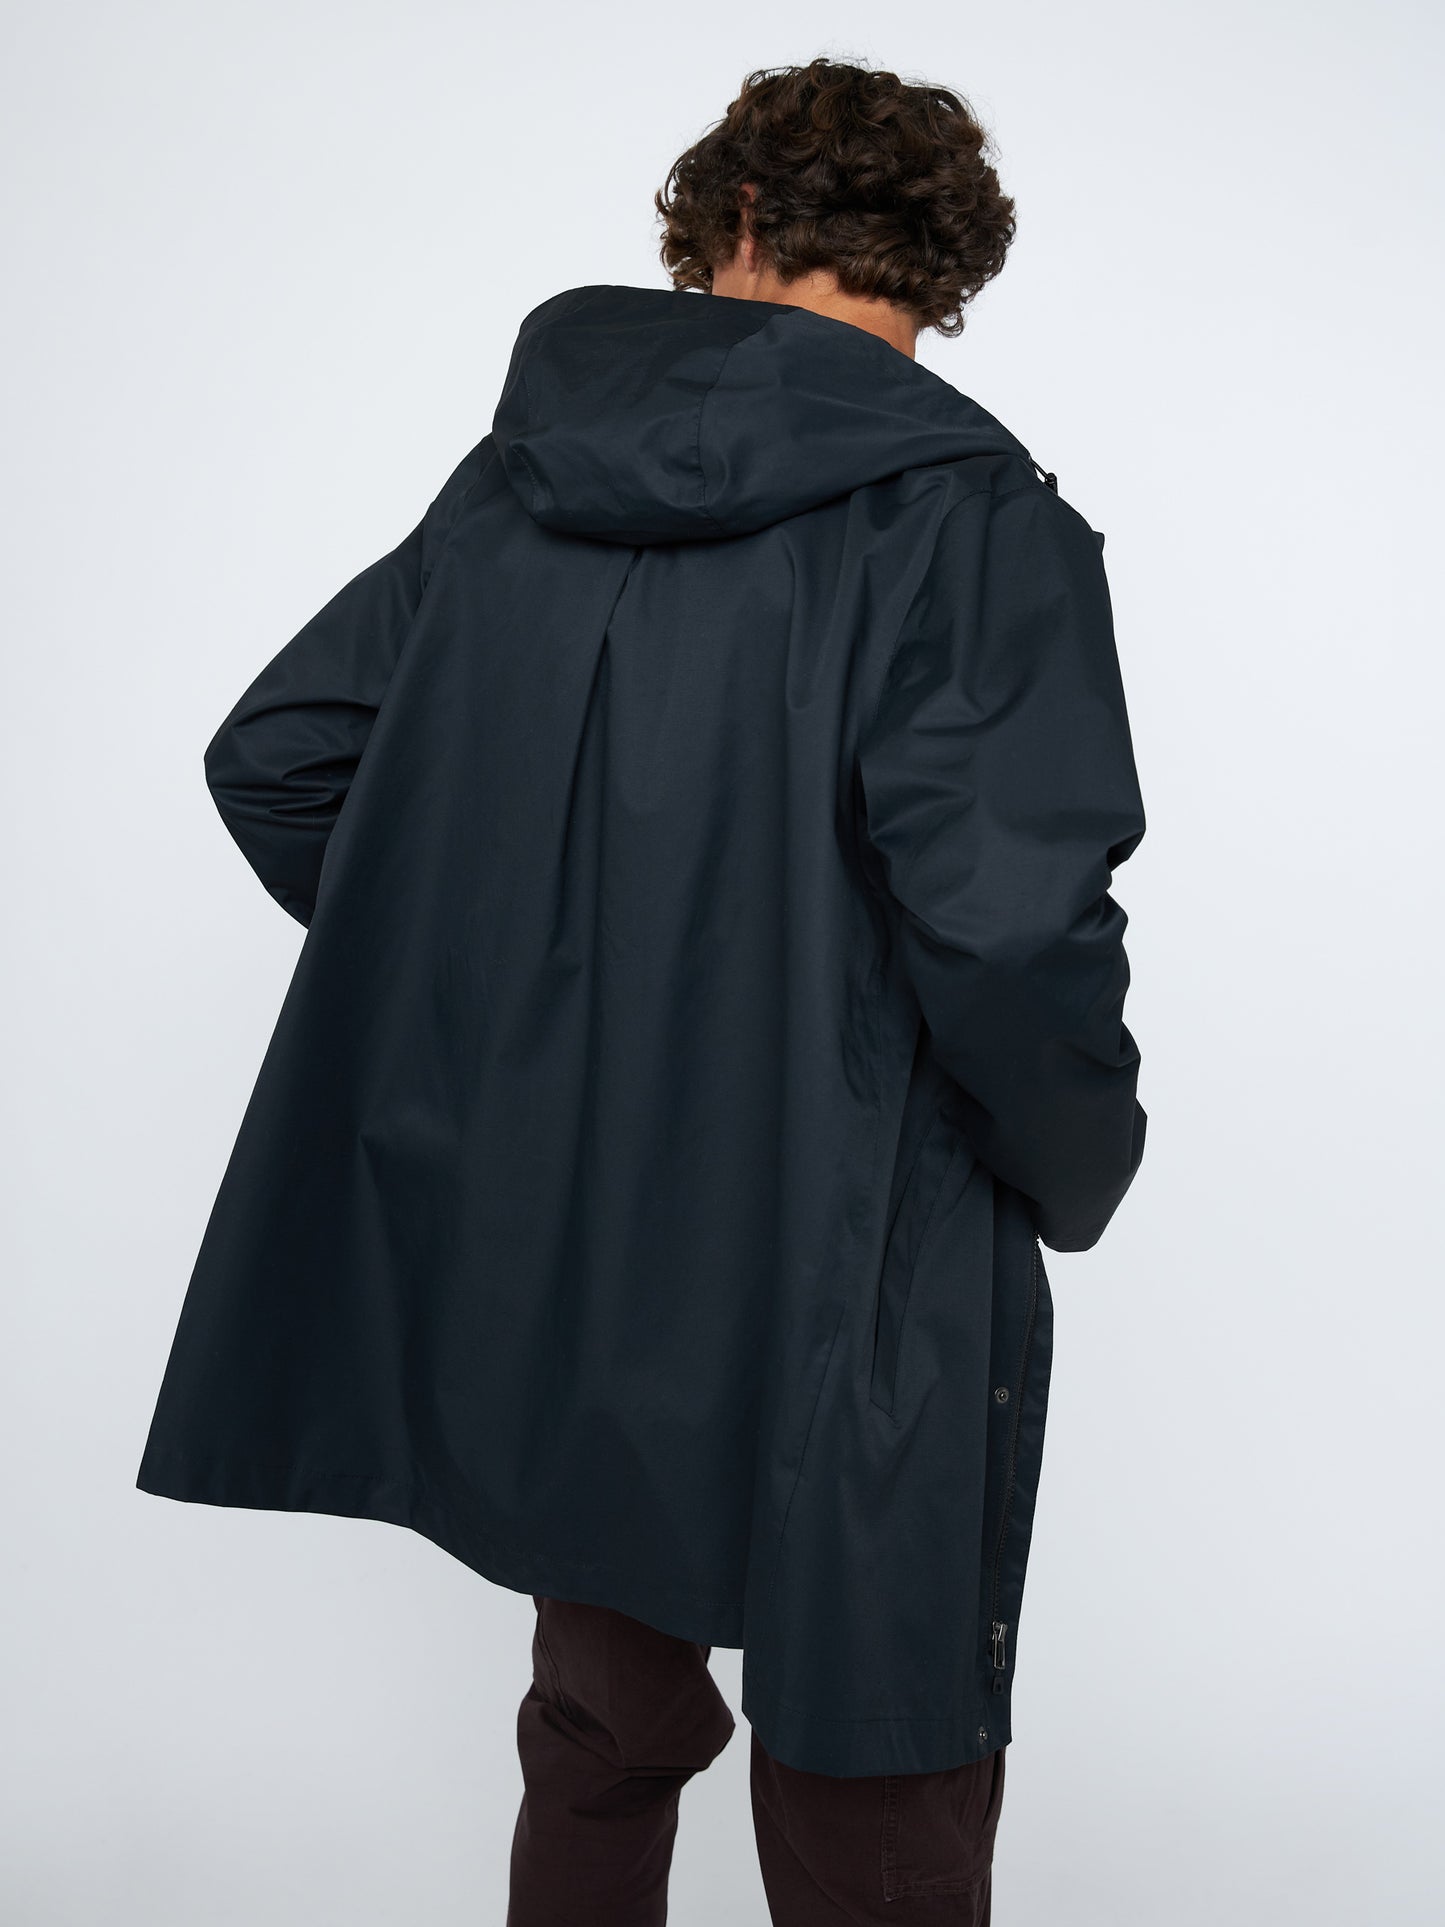 m jackets - ATRIUM - Waterproof Lined Rain Jacket - PLENTY